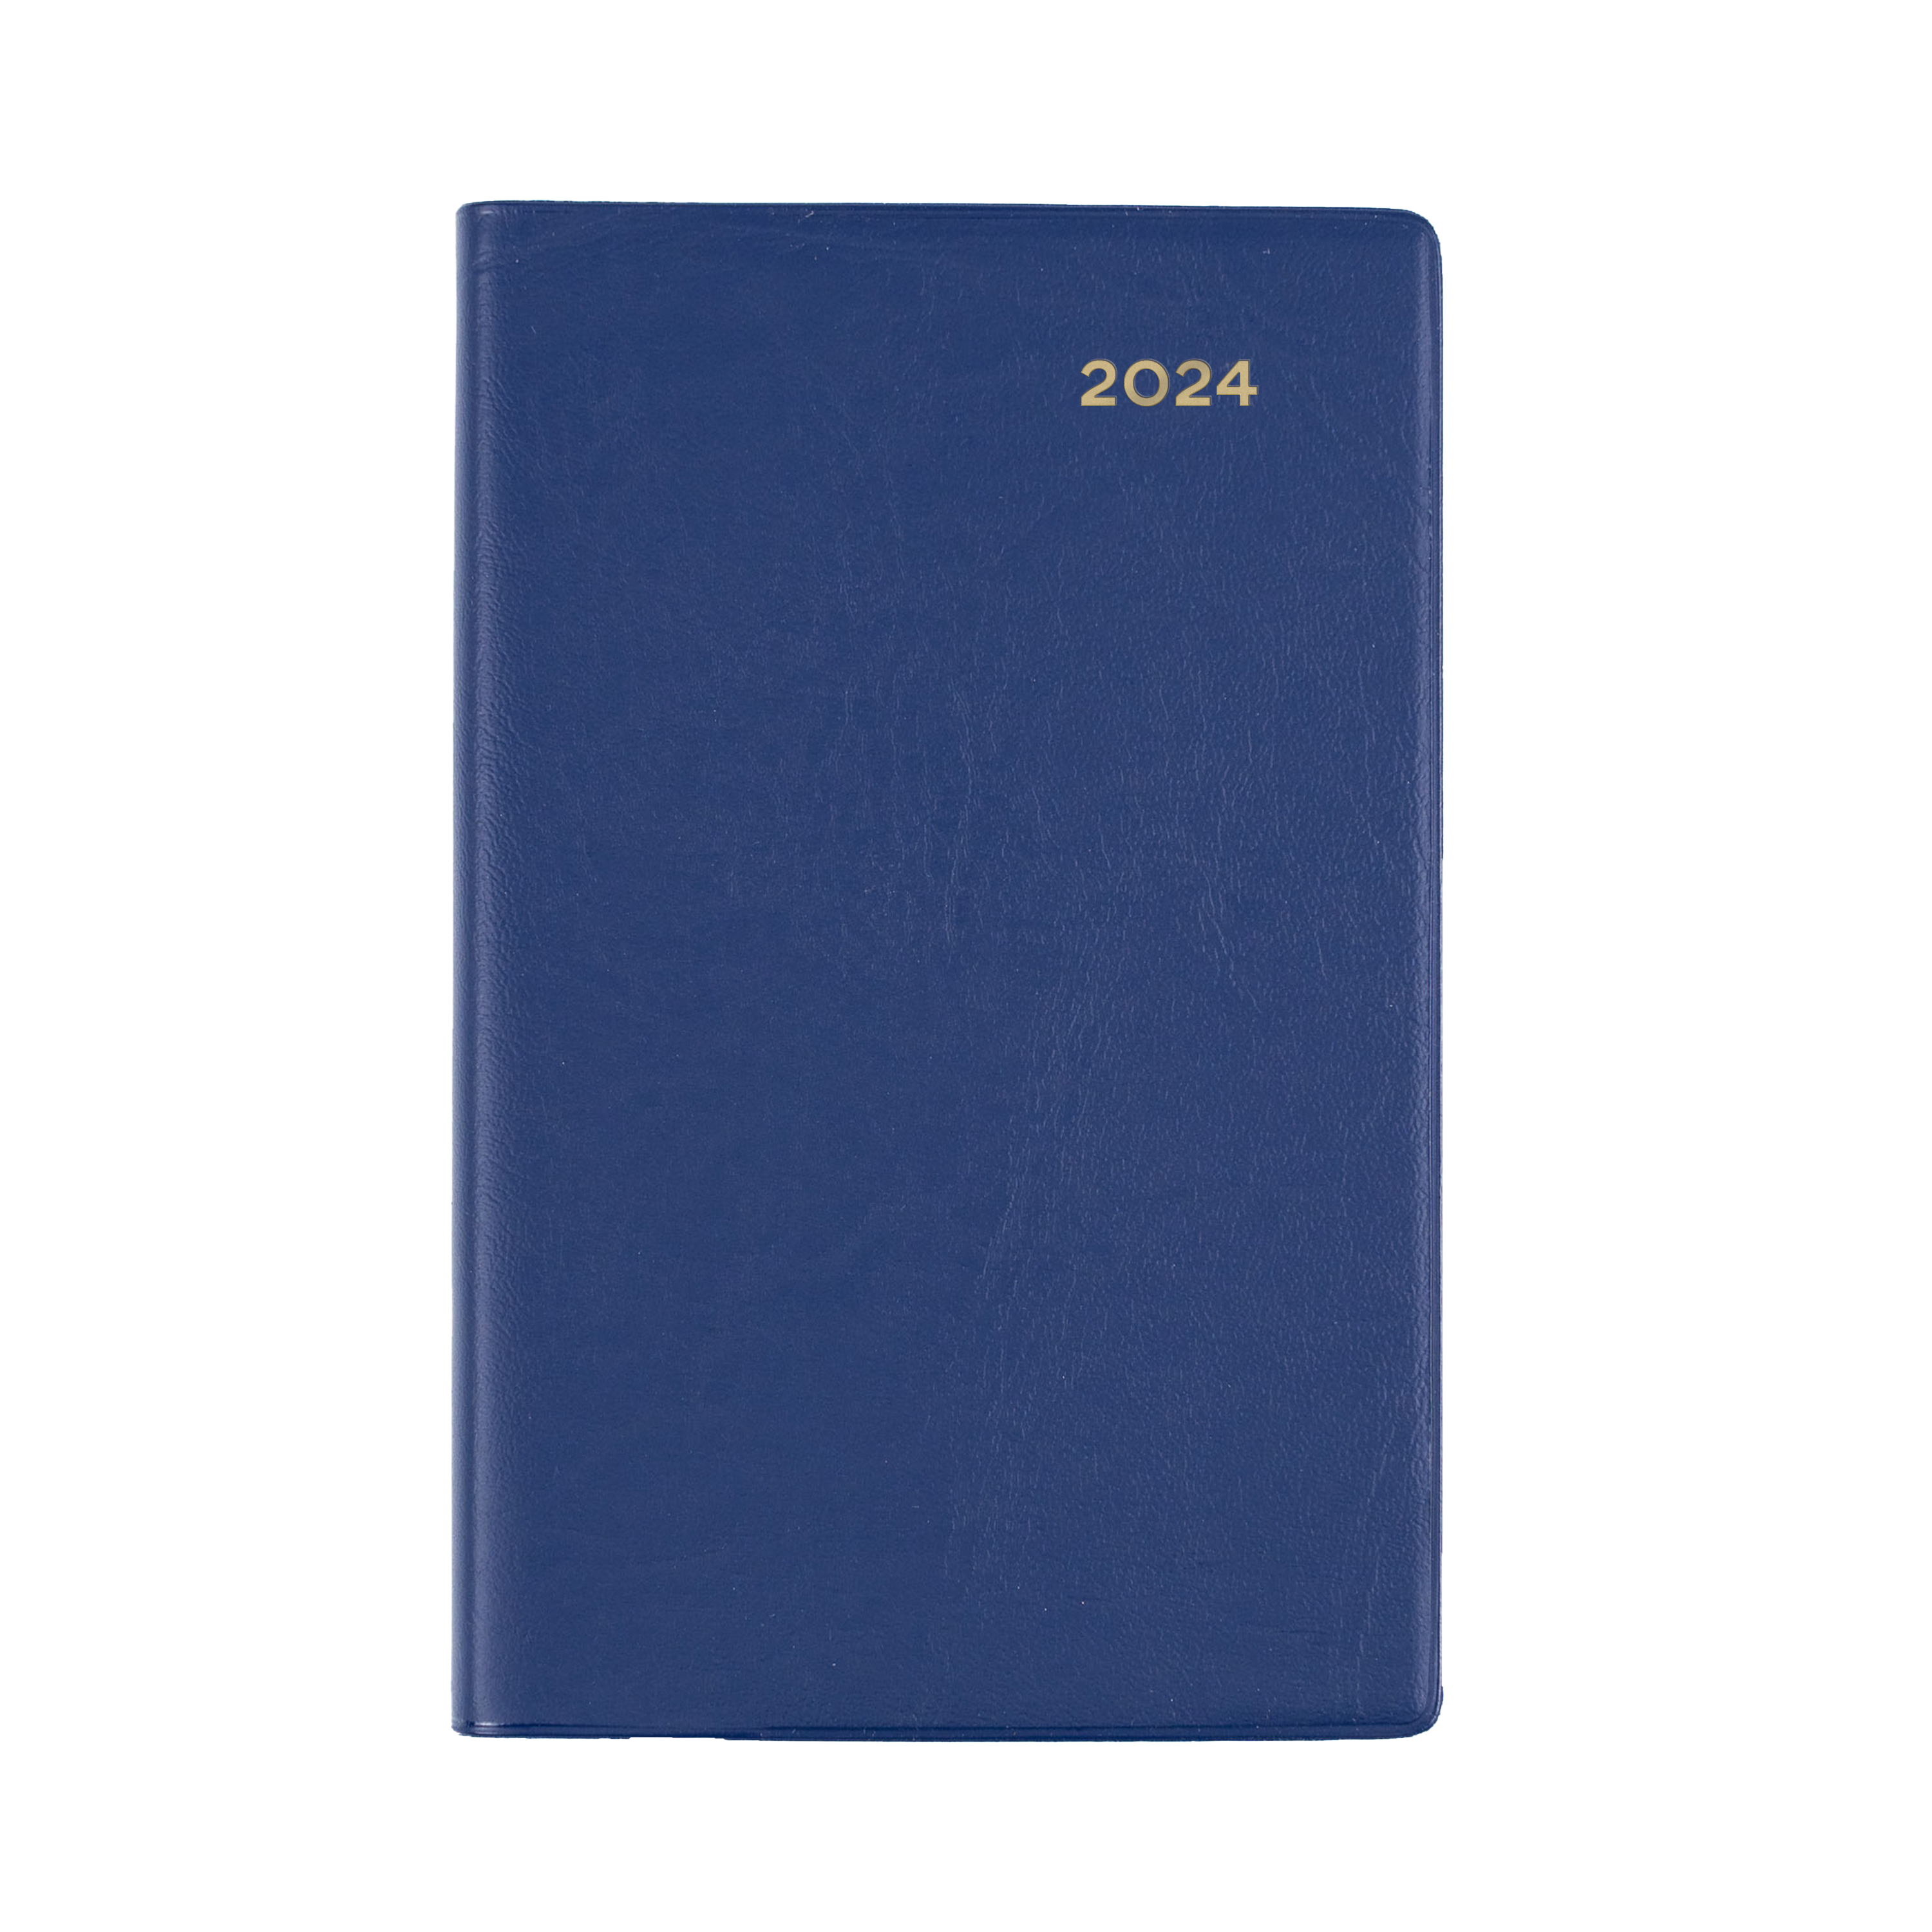 Belmont Pocket 2024 Diary - Week to View, Size B7R Navy / B7R (125 x 80mm)